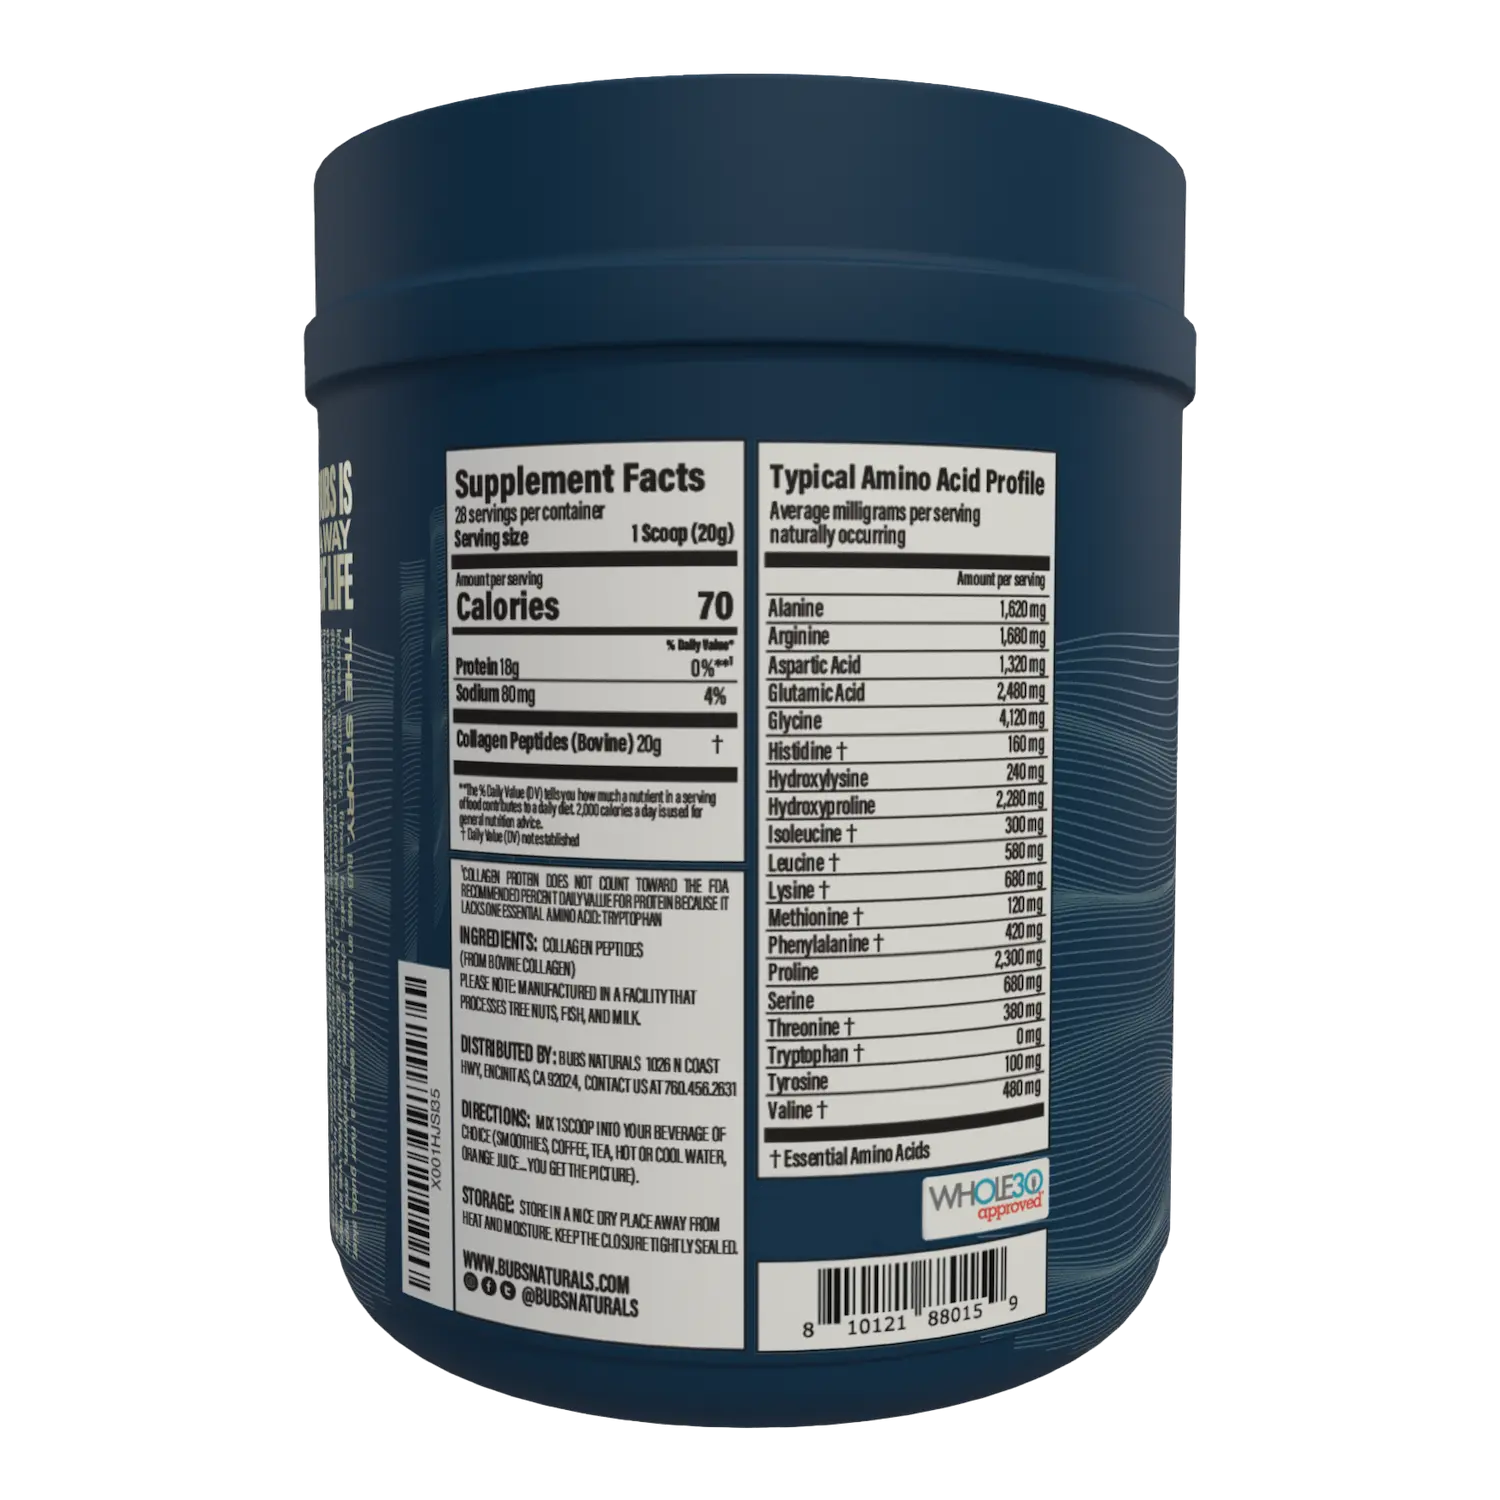 BUBS Naturals Collagen Peptides Label - The Essential Bundle